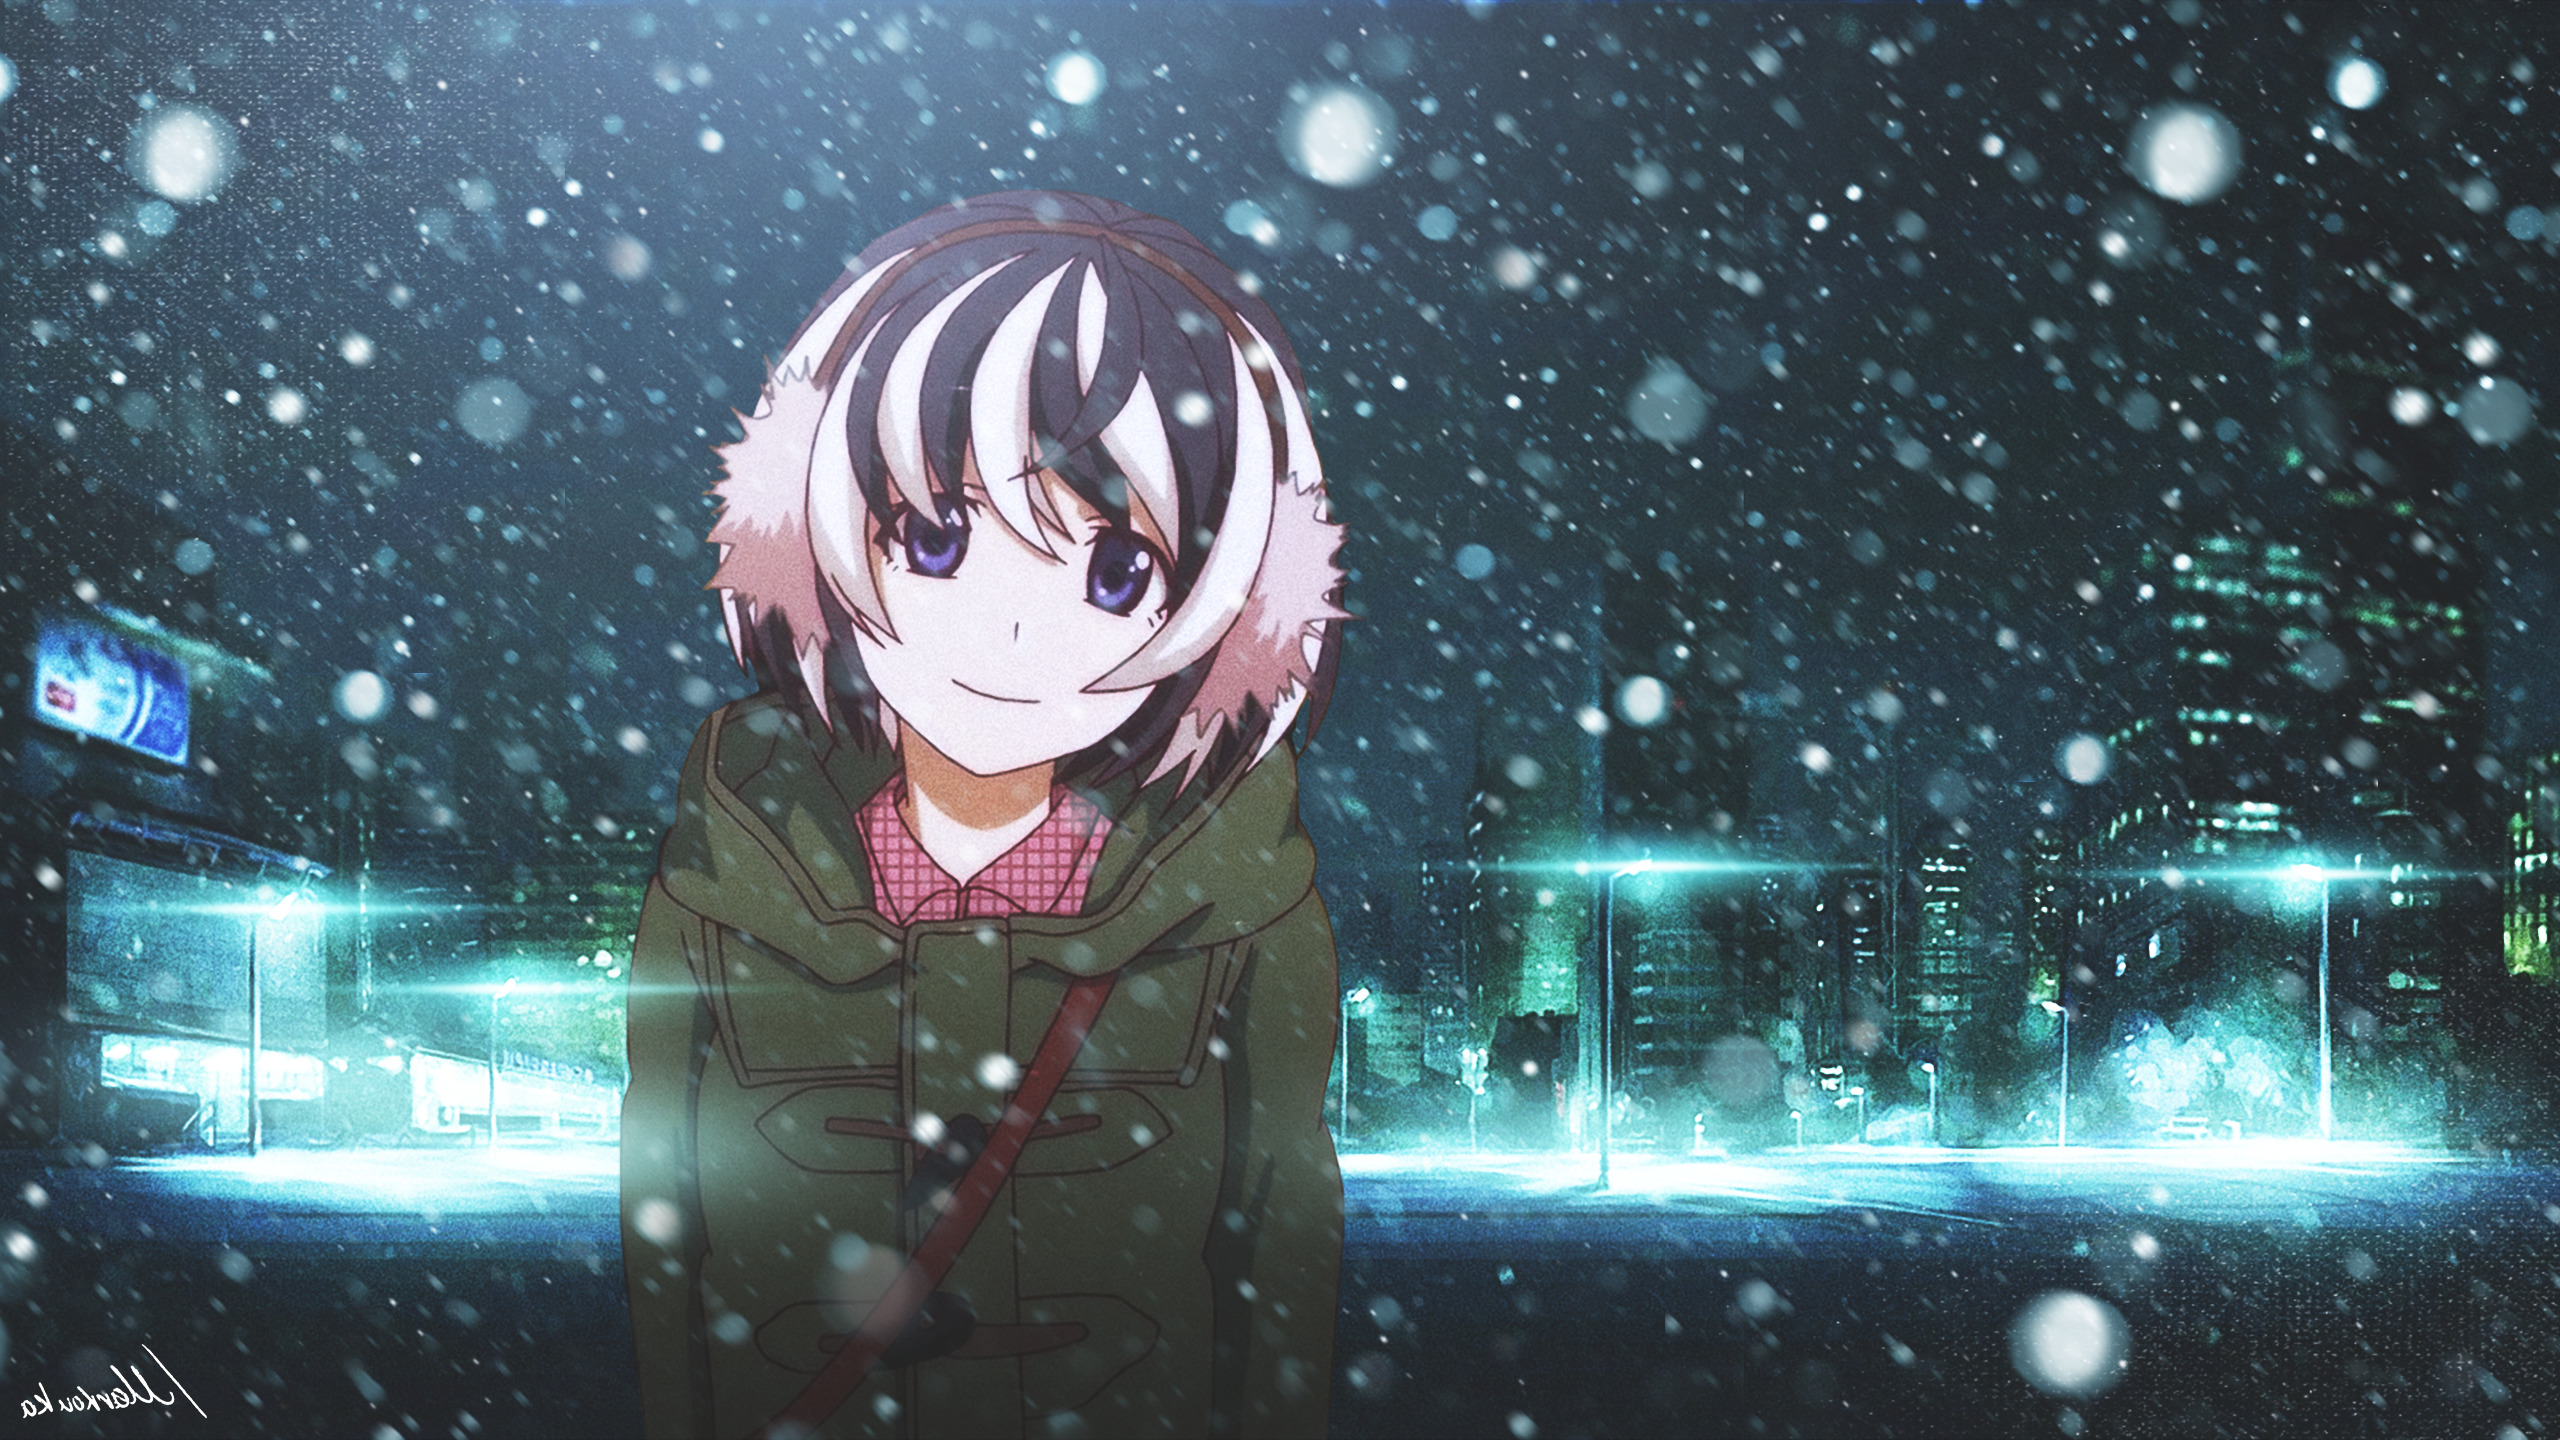 Monogatari Series, Hanekawa Tsubasa, Winter, Night, City